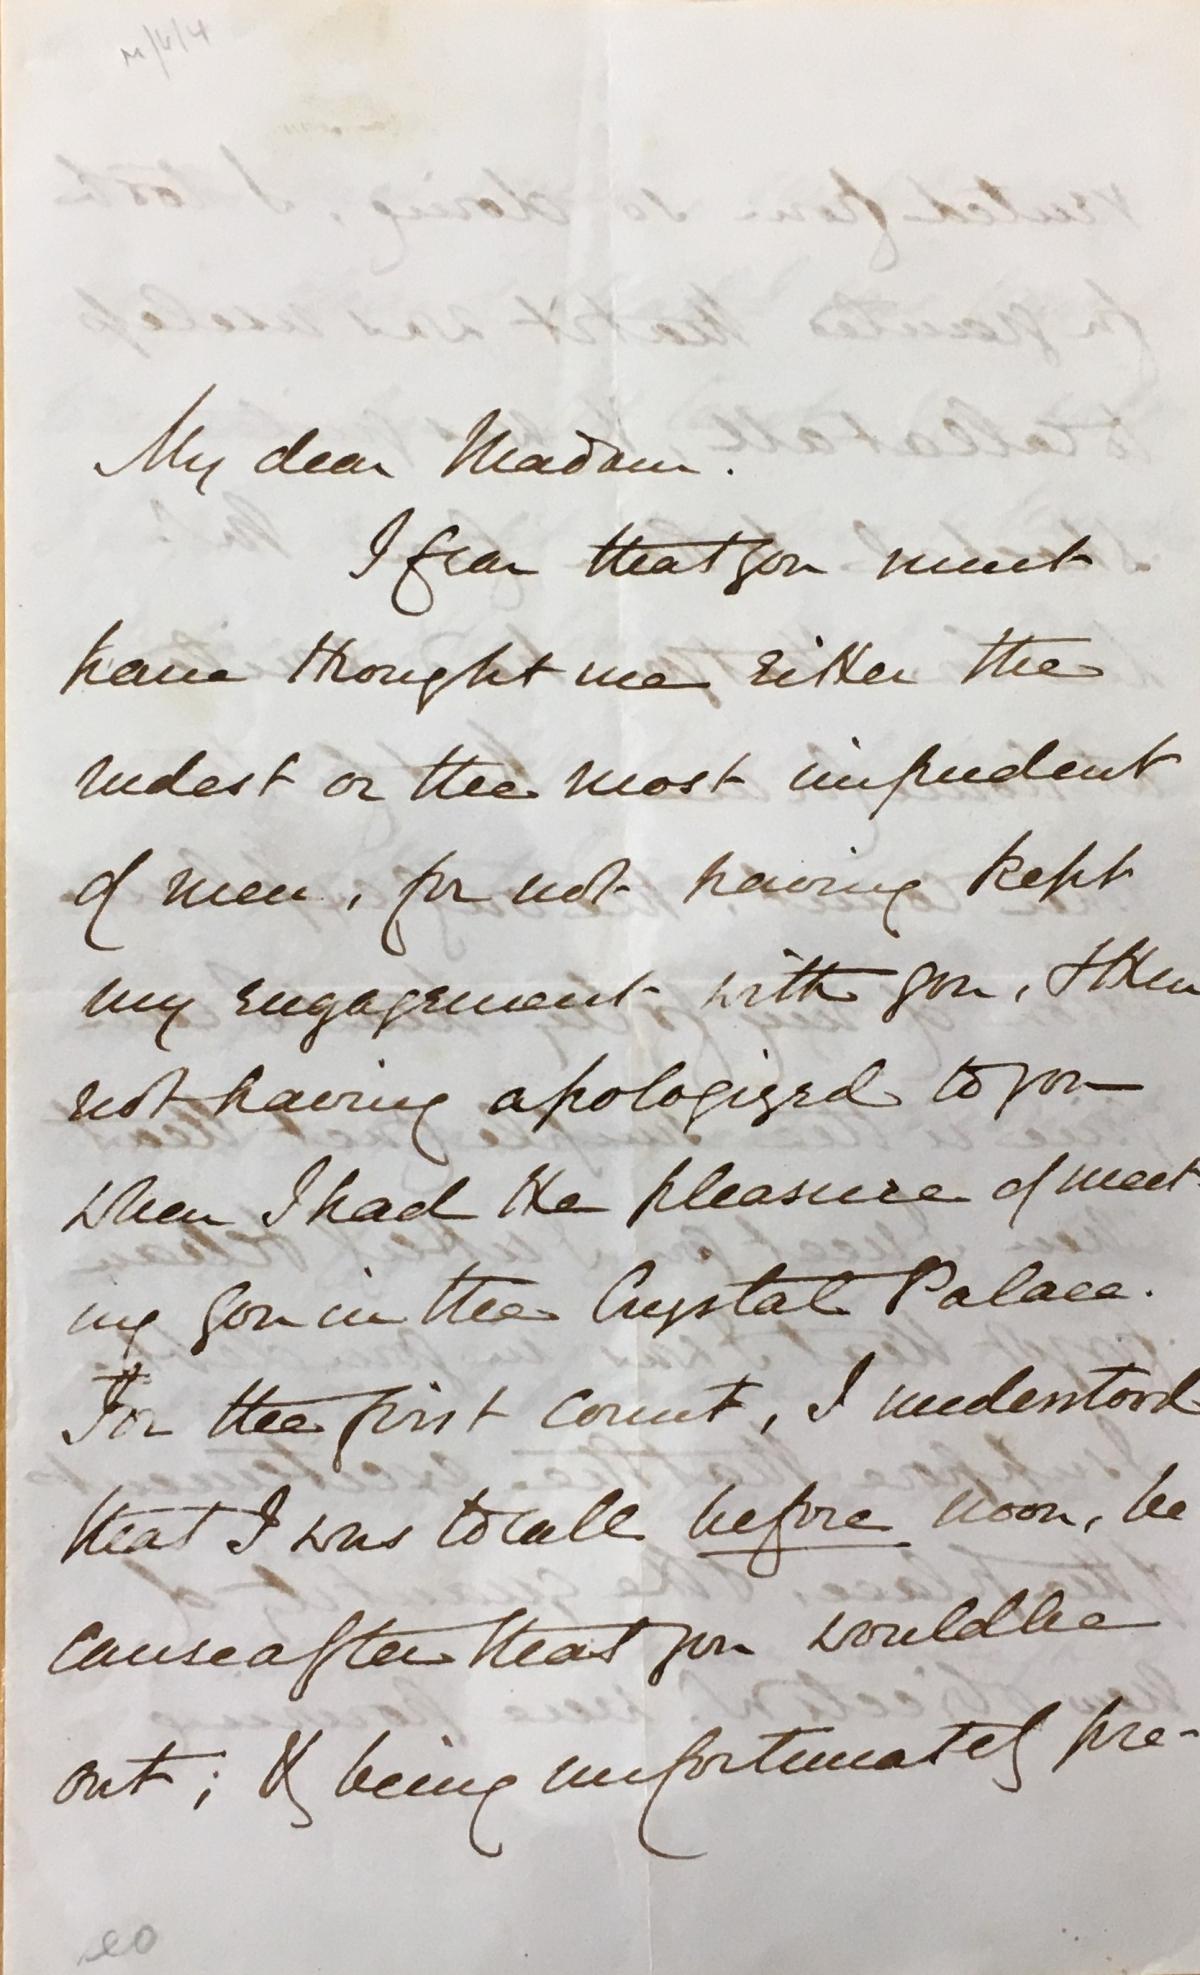 Letter from Charles Kingsley at Babbacombe, 23rd June 1854.  (Devon Heritage Centre: 53/10/7) (https://devon-cat.swheritage.org.uk/records/53/10/7)